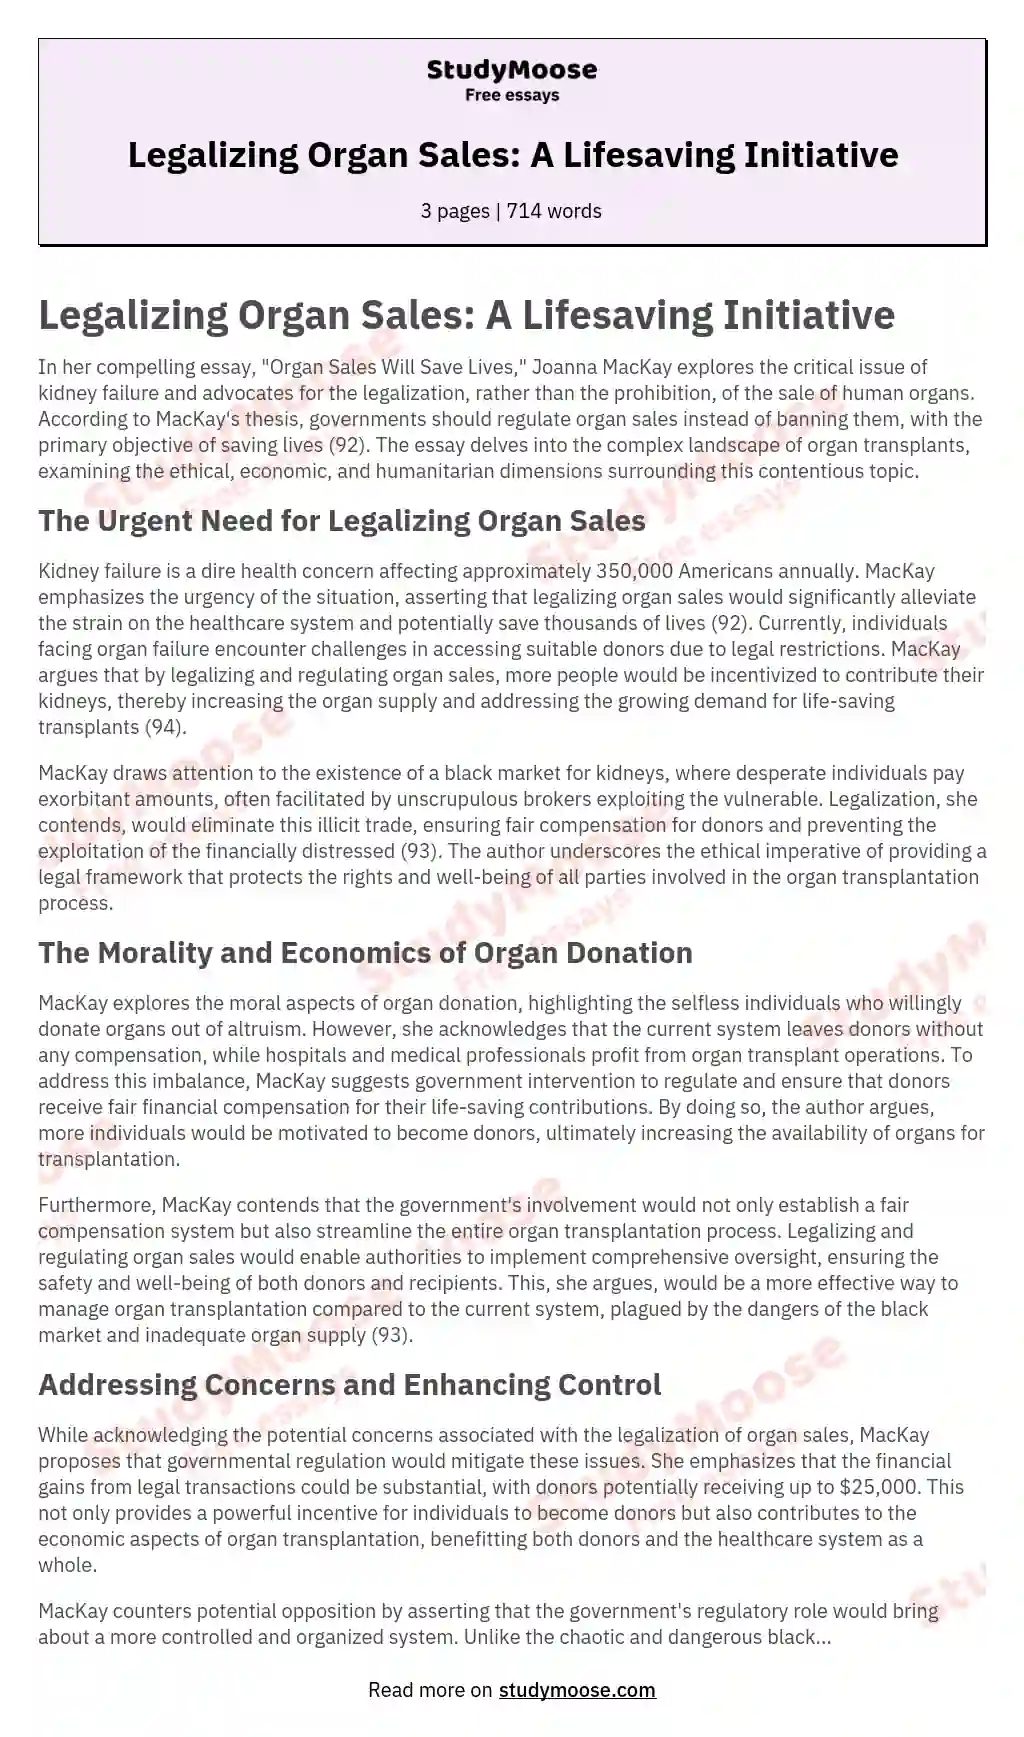 Legalizing Organ Sales: A Lifesaving Initiative essay